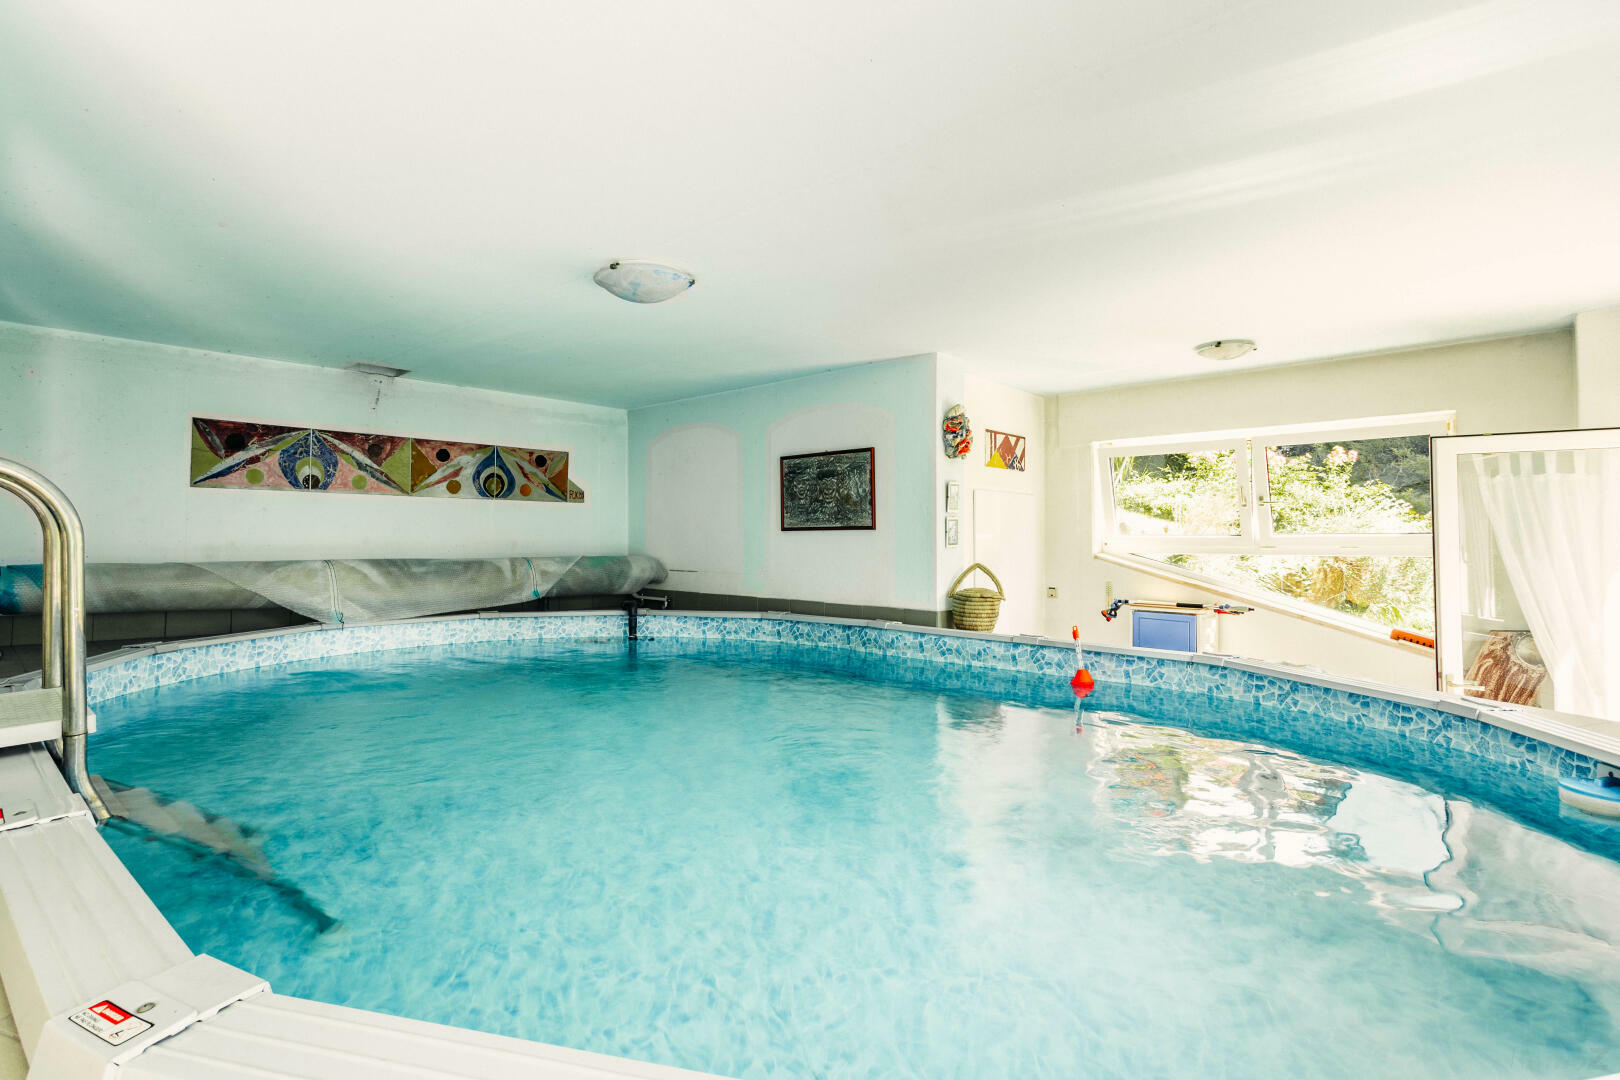 Haus zu kaufen: 8043 Graz - Pool Indoor